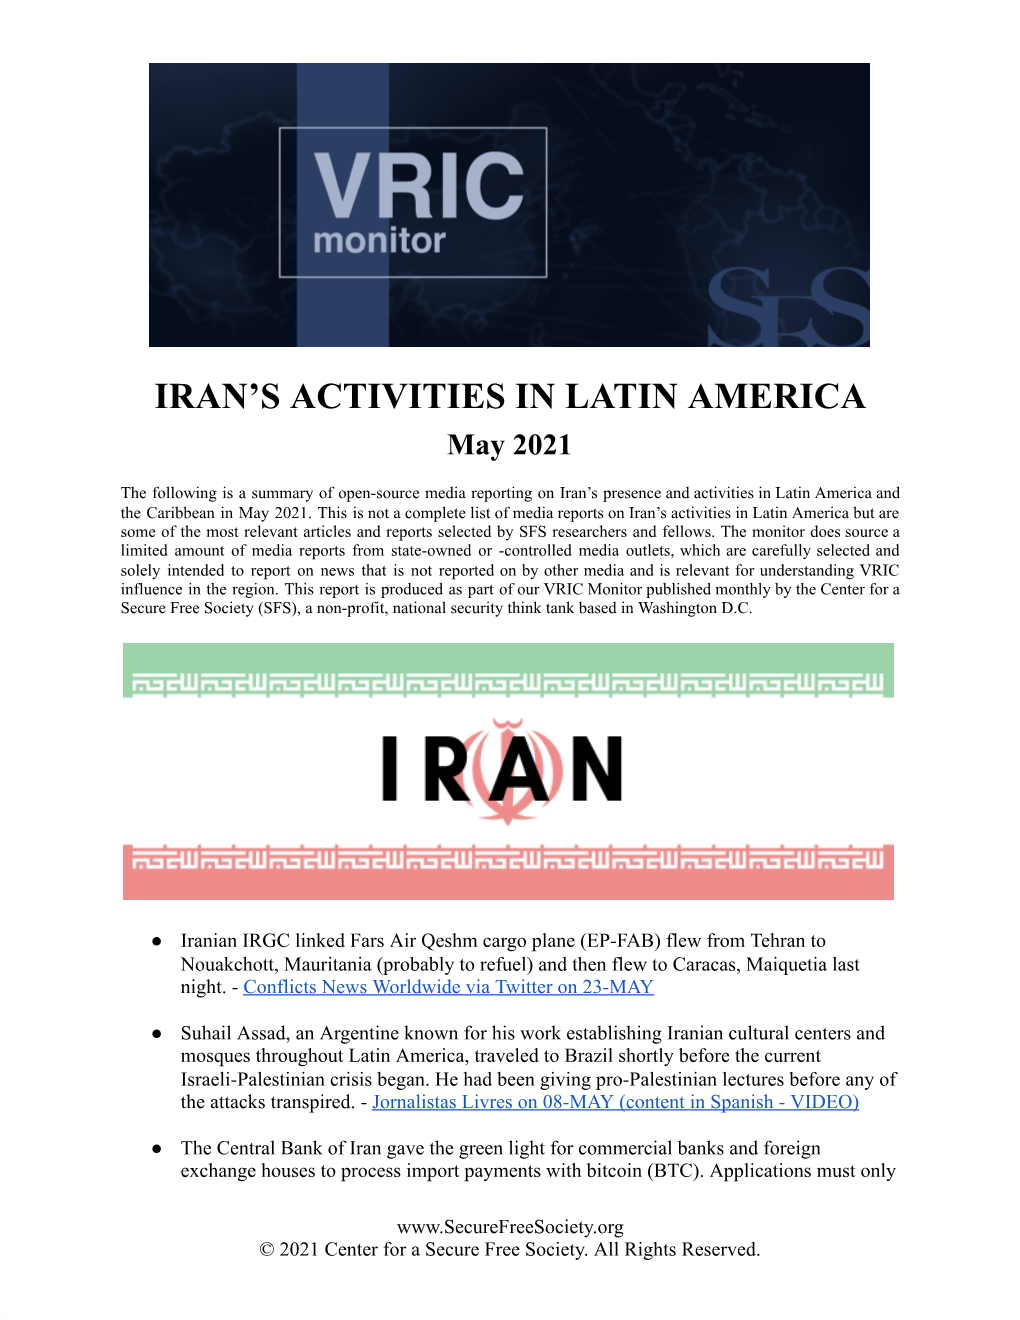 Iran's Activities in Latin America